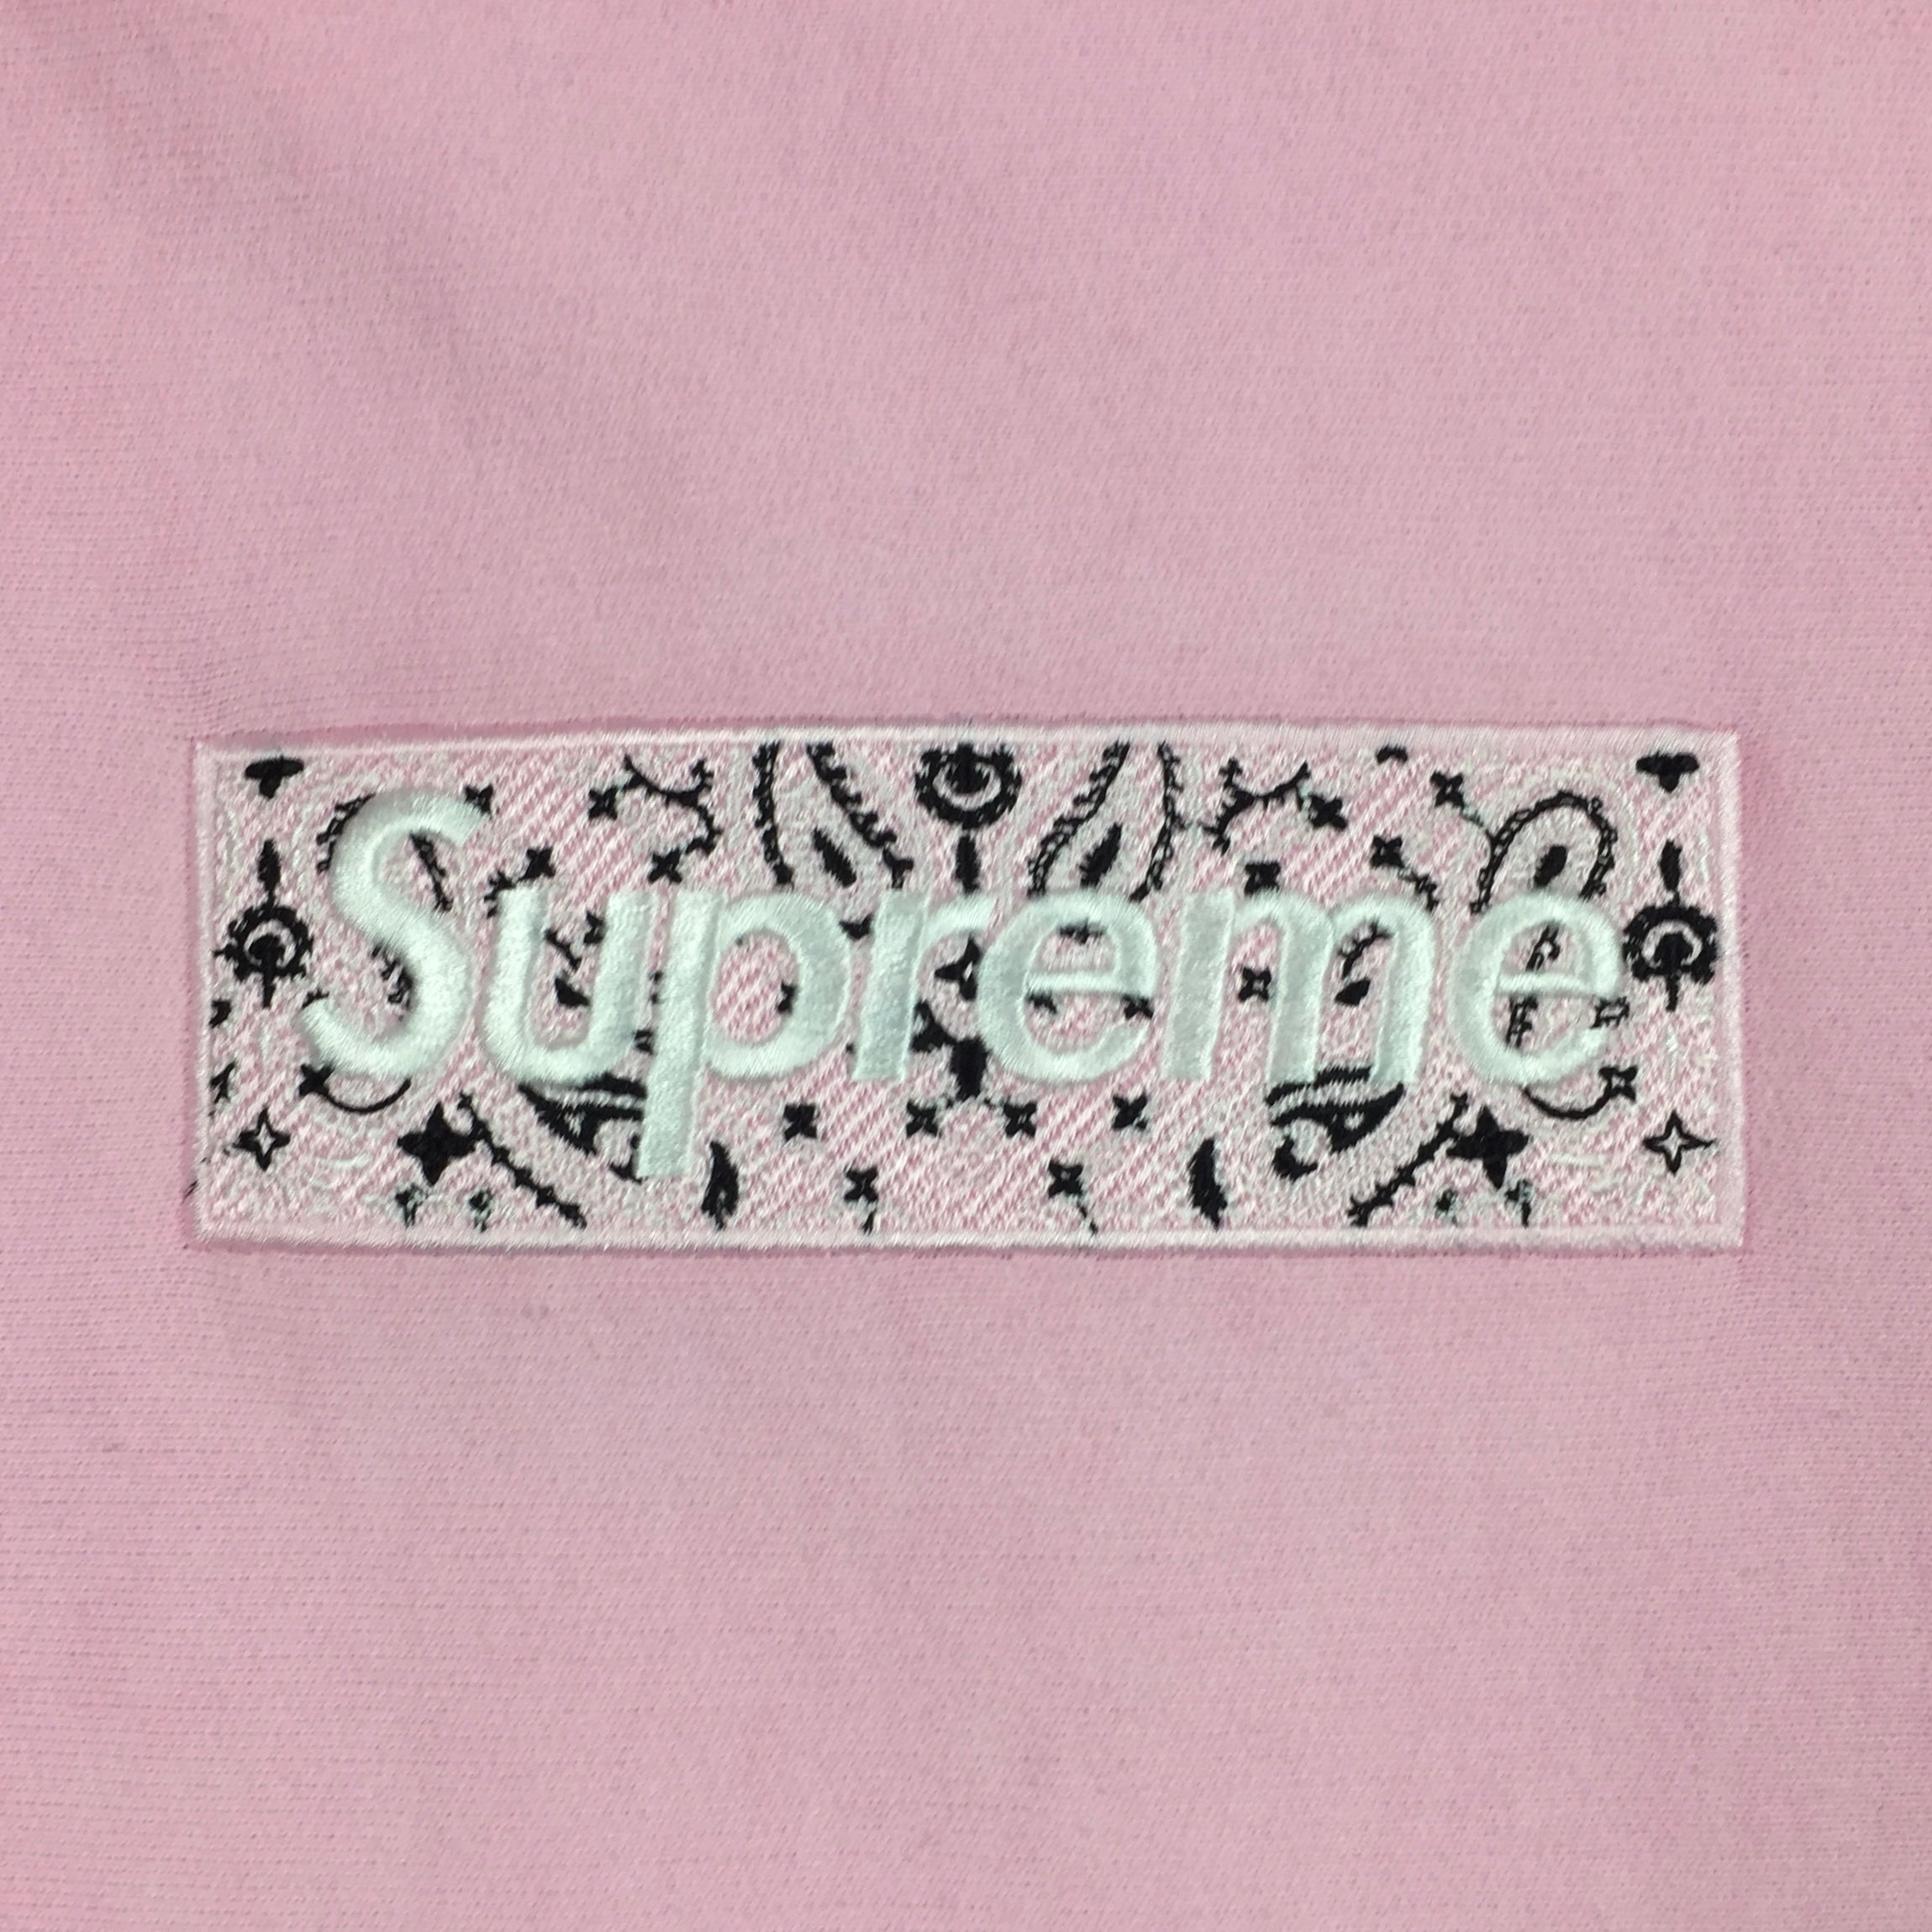 2019 Supreme Pink Bandana Paisley Box Logo Hoodie